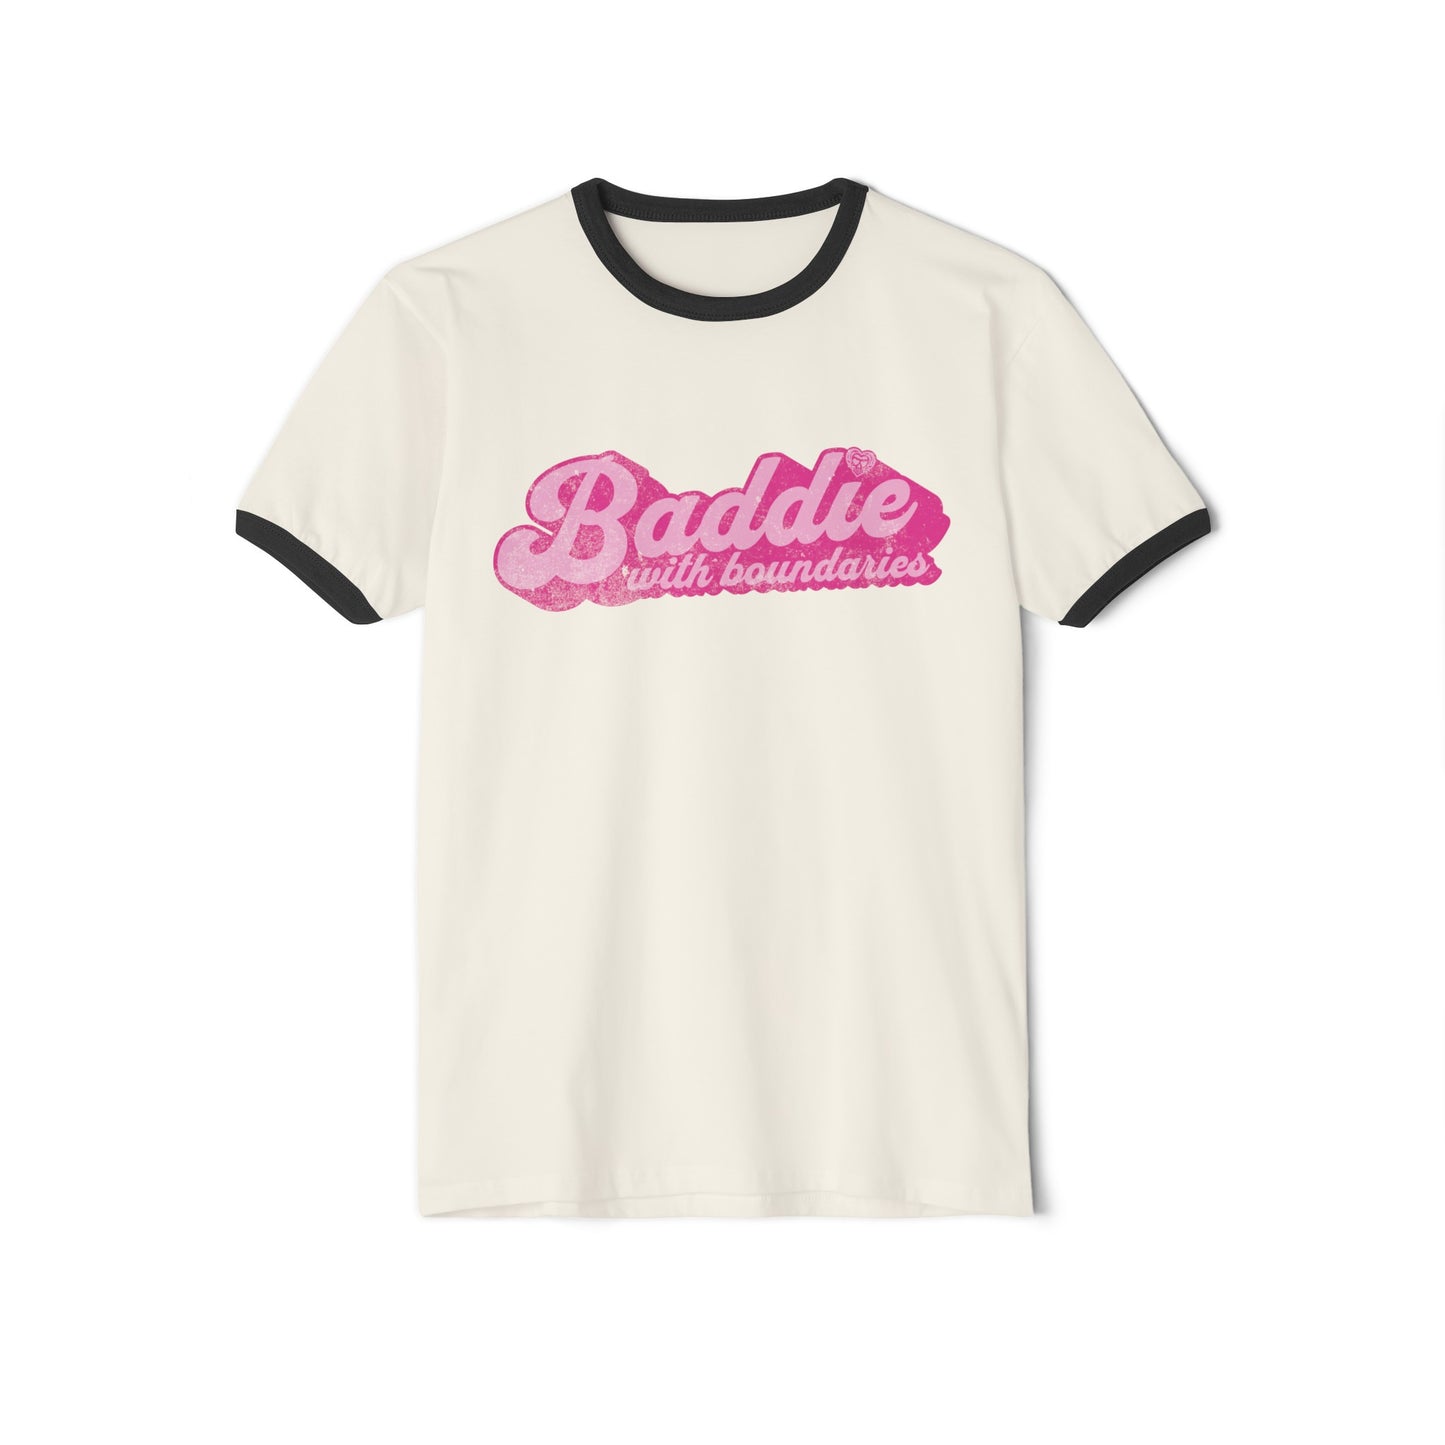 Baddie with Boundaries Ringer T-Shirt Natural Black